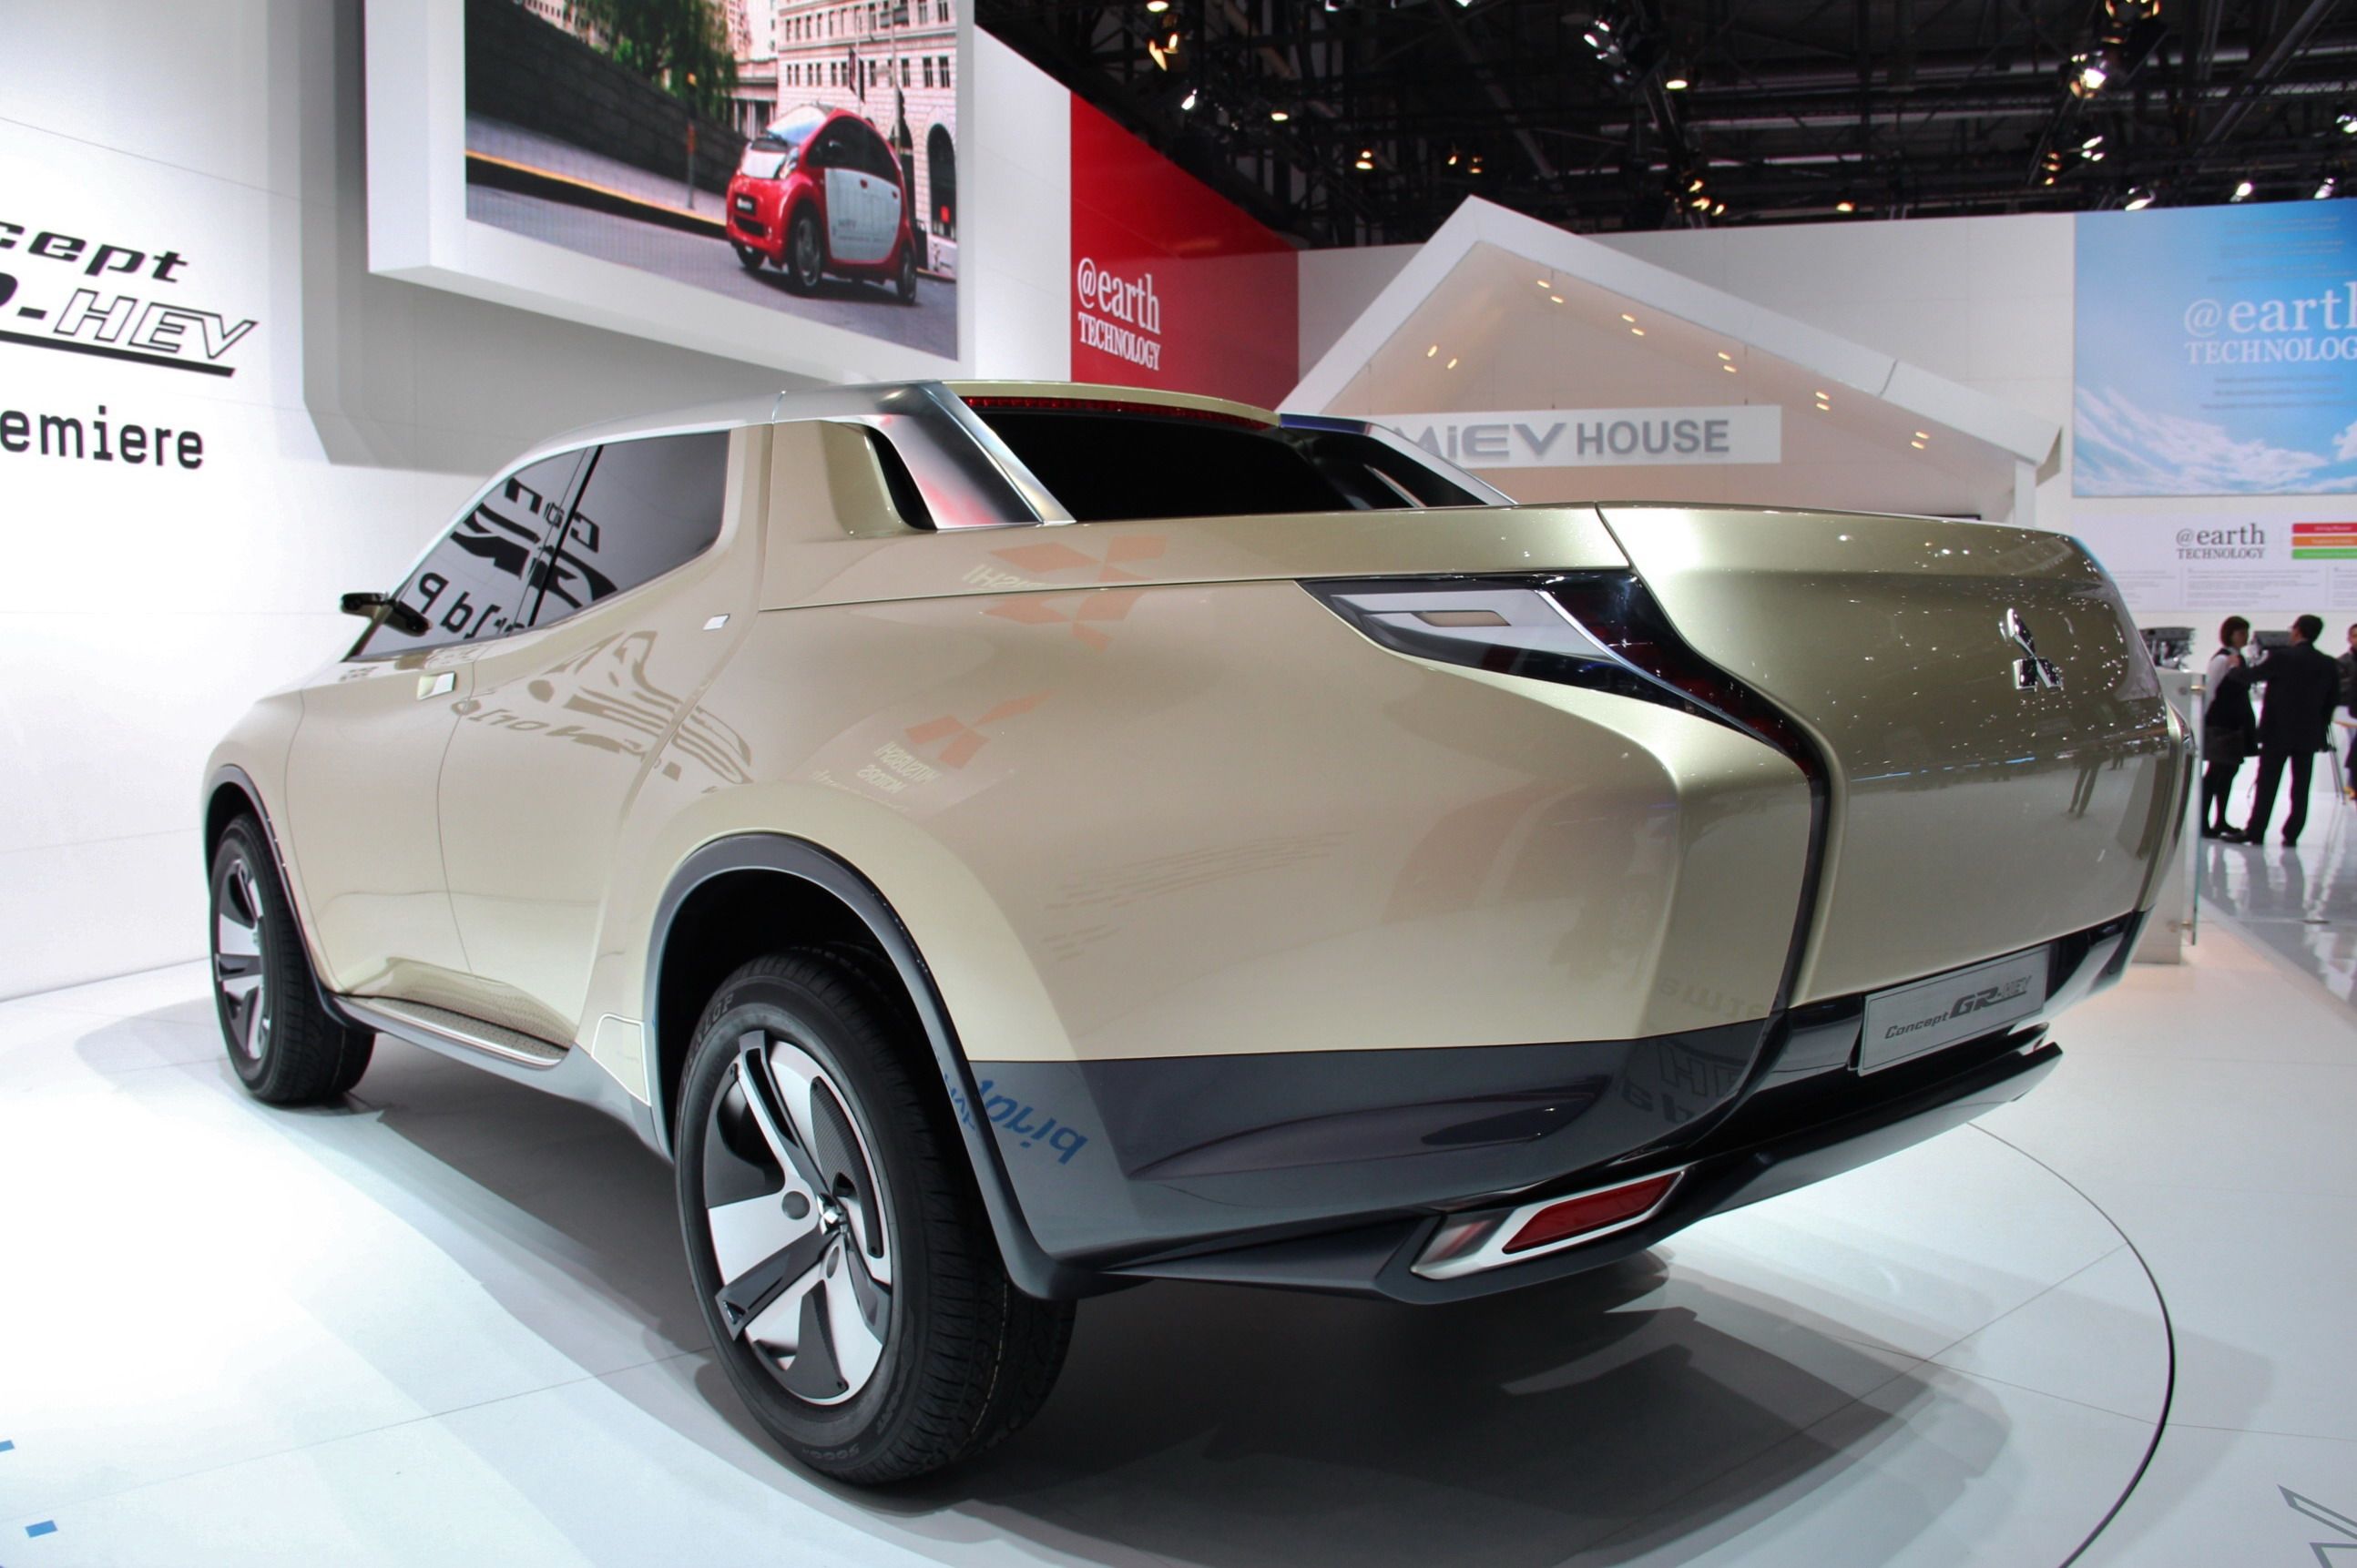 2013 Mitsubishi GR-HEV Concept